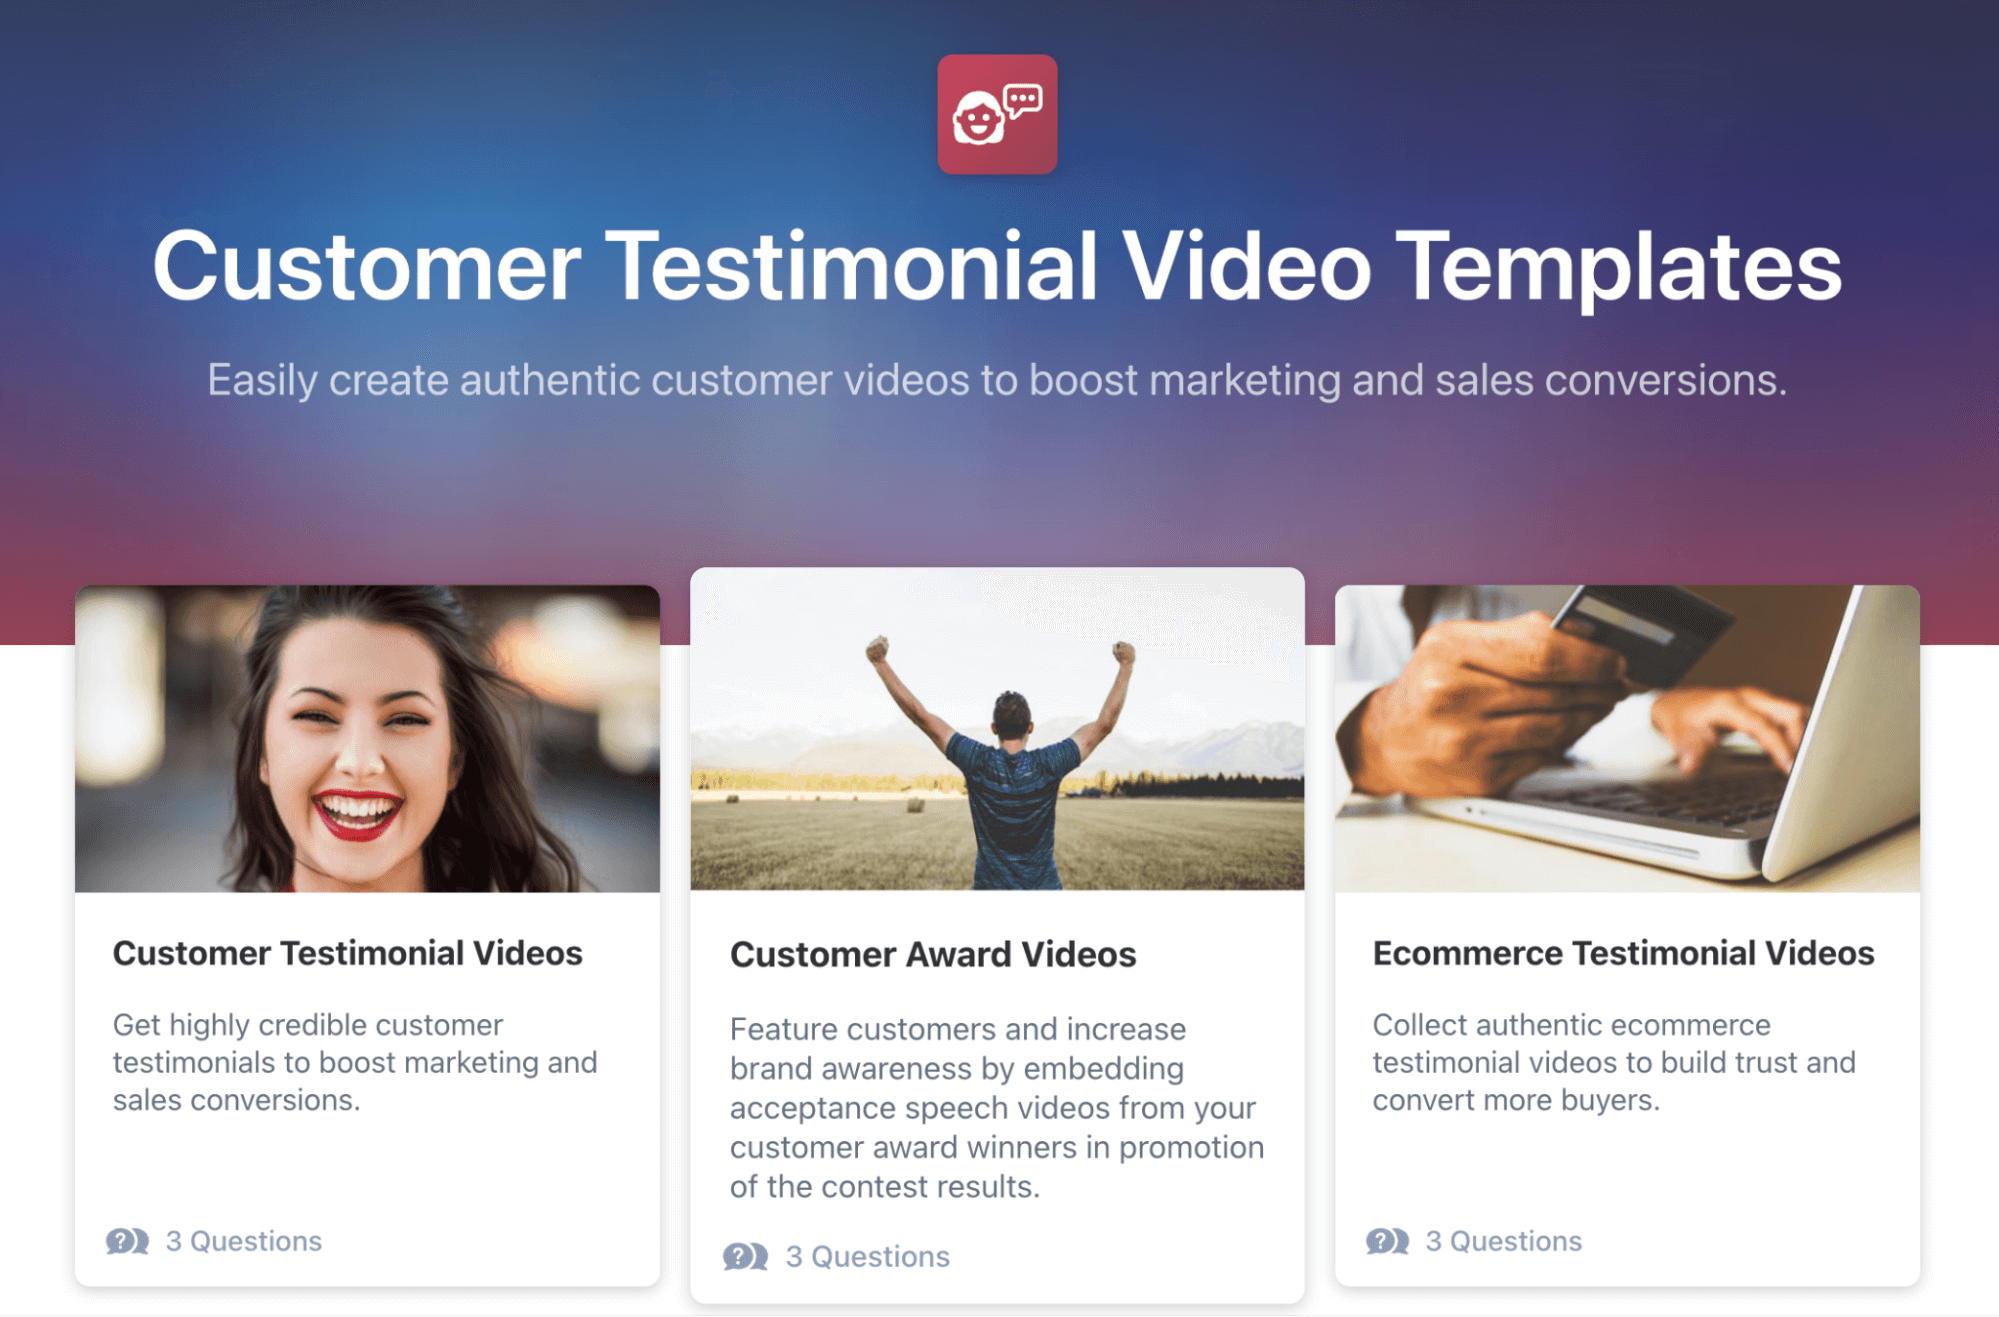 Customer Testimonial Video Templates